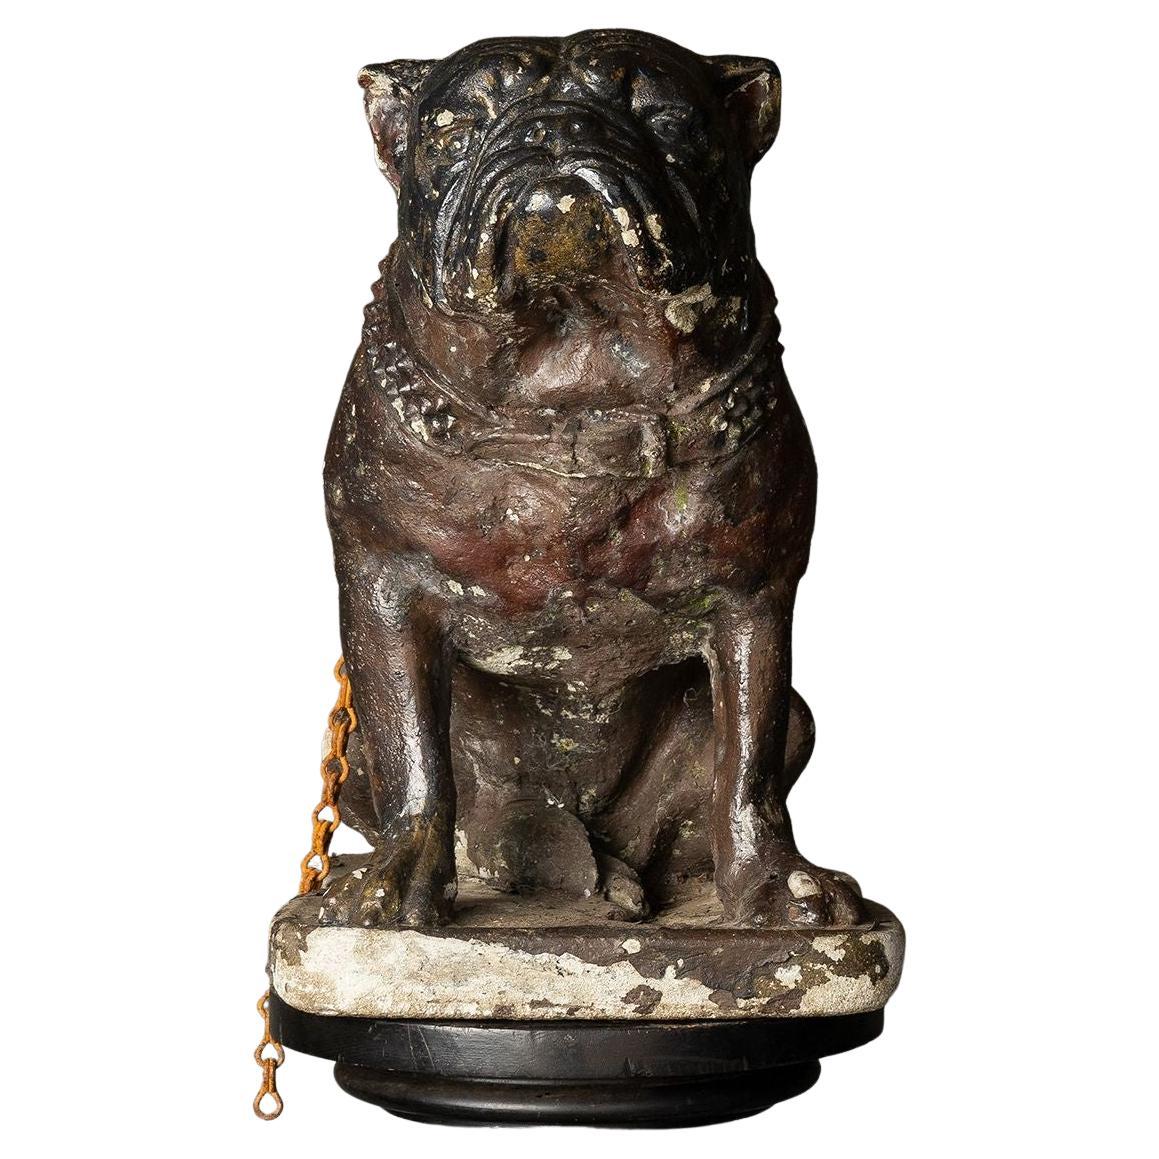 British Vintage Reconstituted Stone English Bulldog Garden Statue Figure c. 1920s For Sale